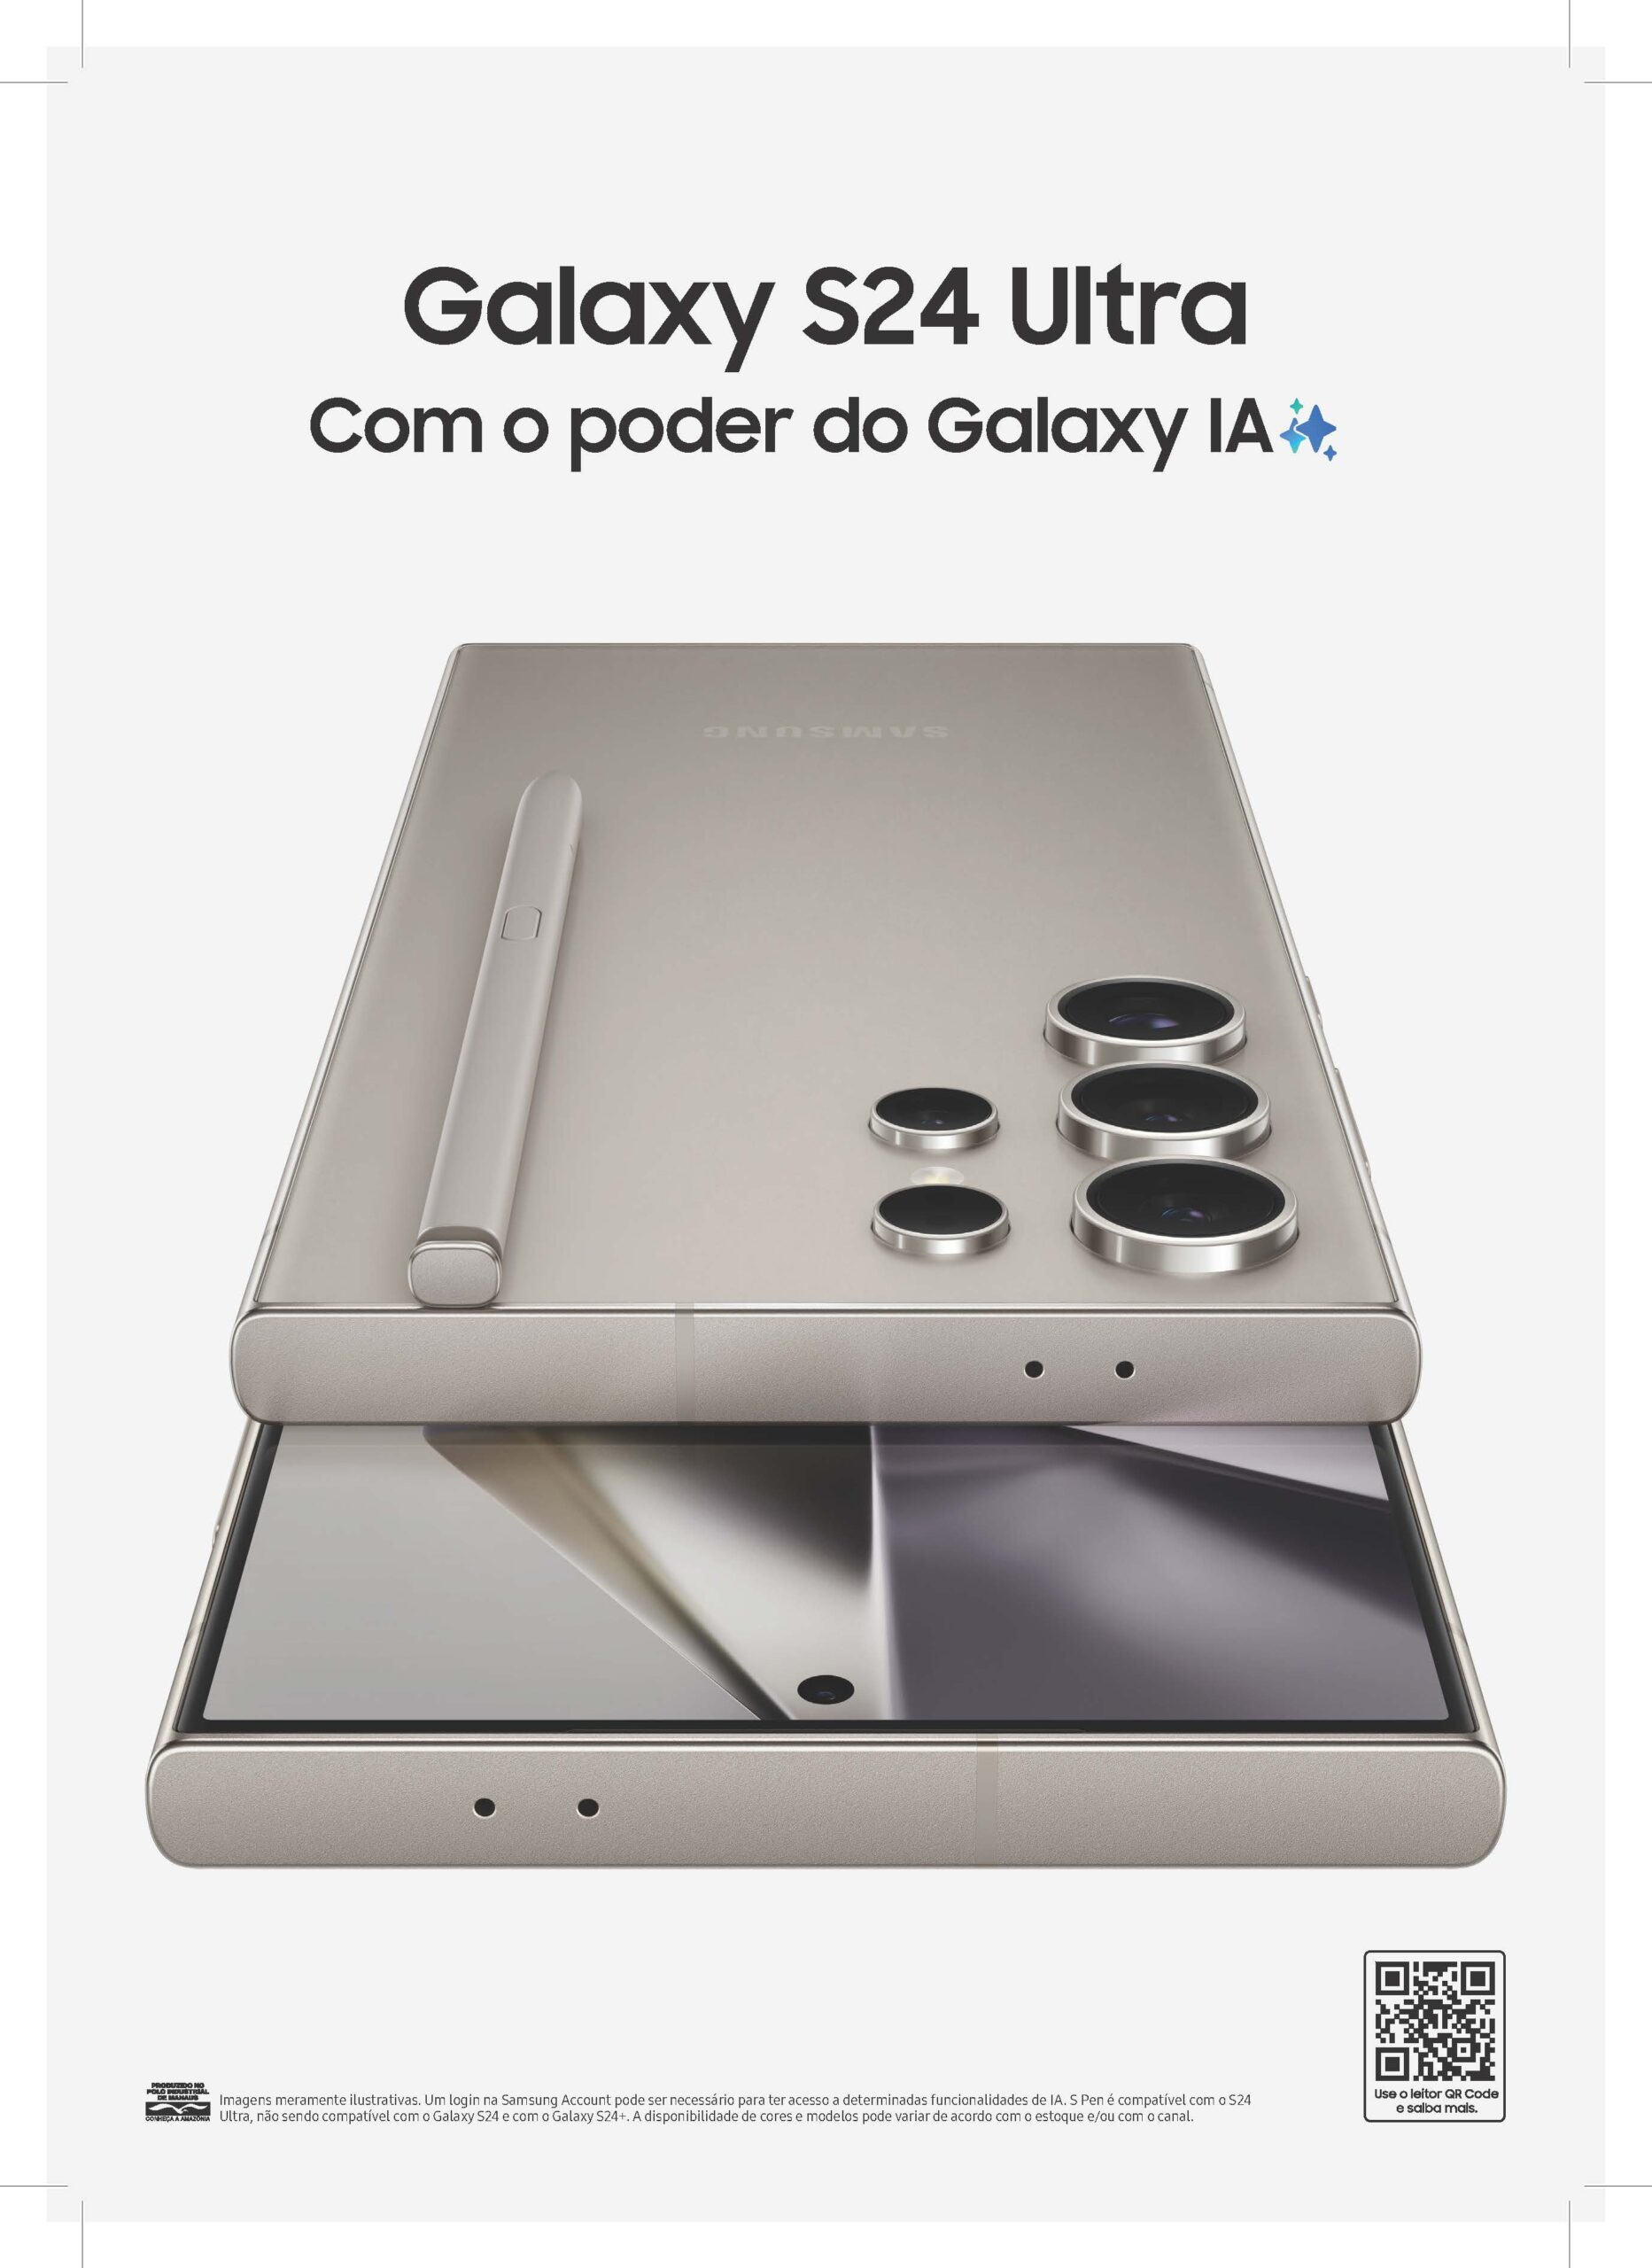 Samsung Galaxy S24 Ultra leaks via marketing posters in Brazil - SamMobile